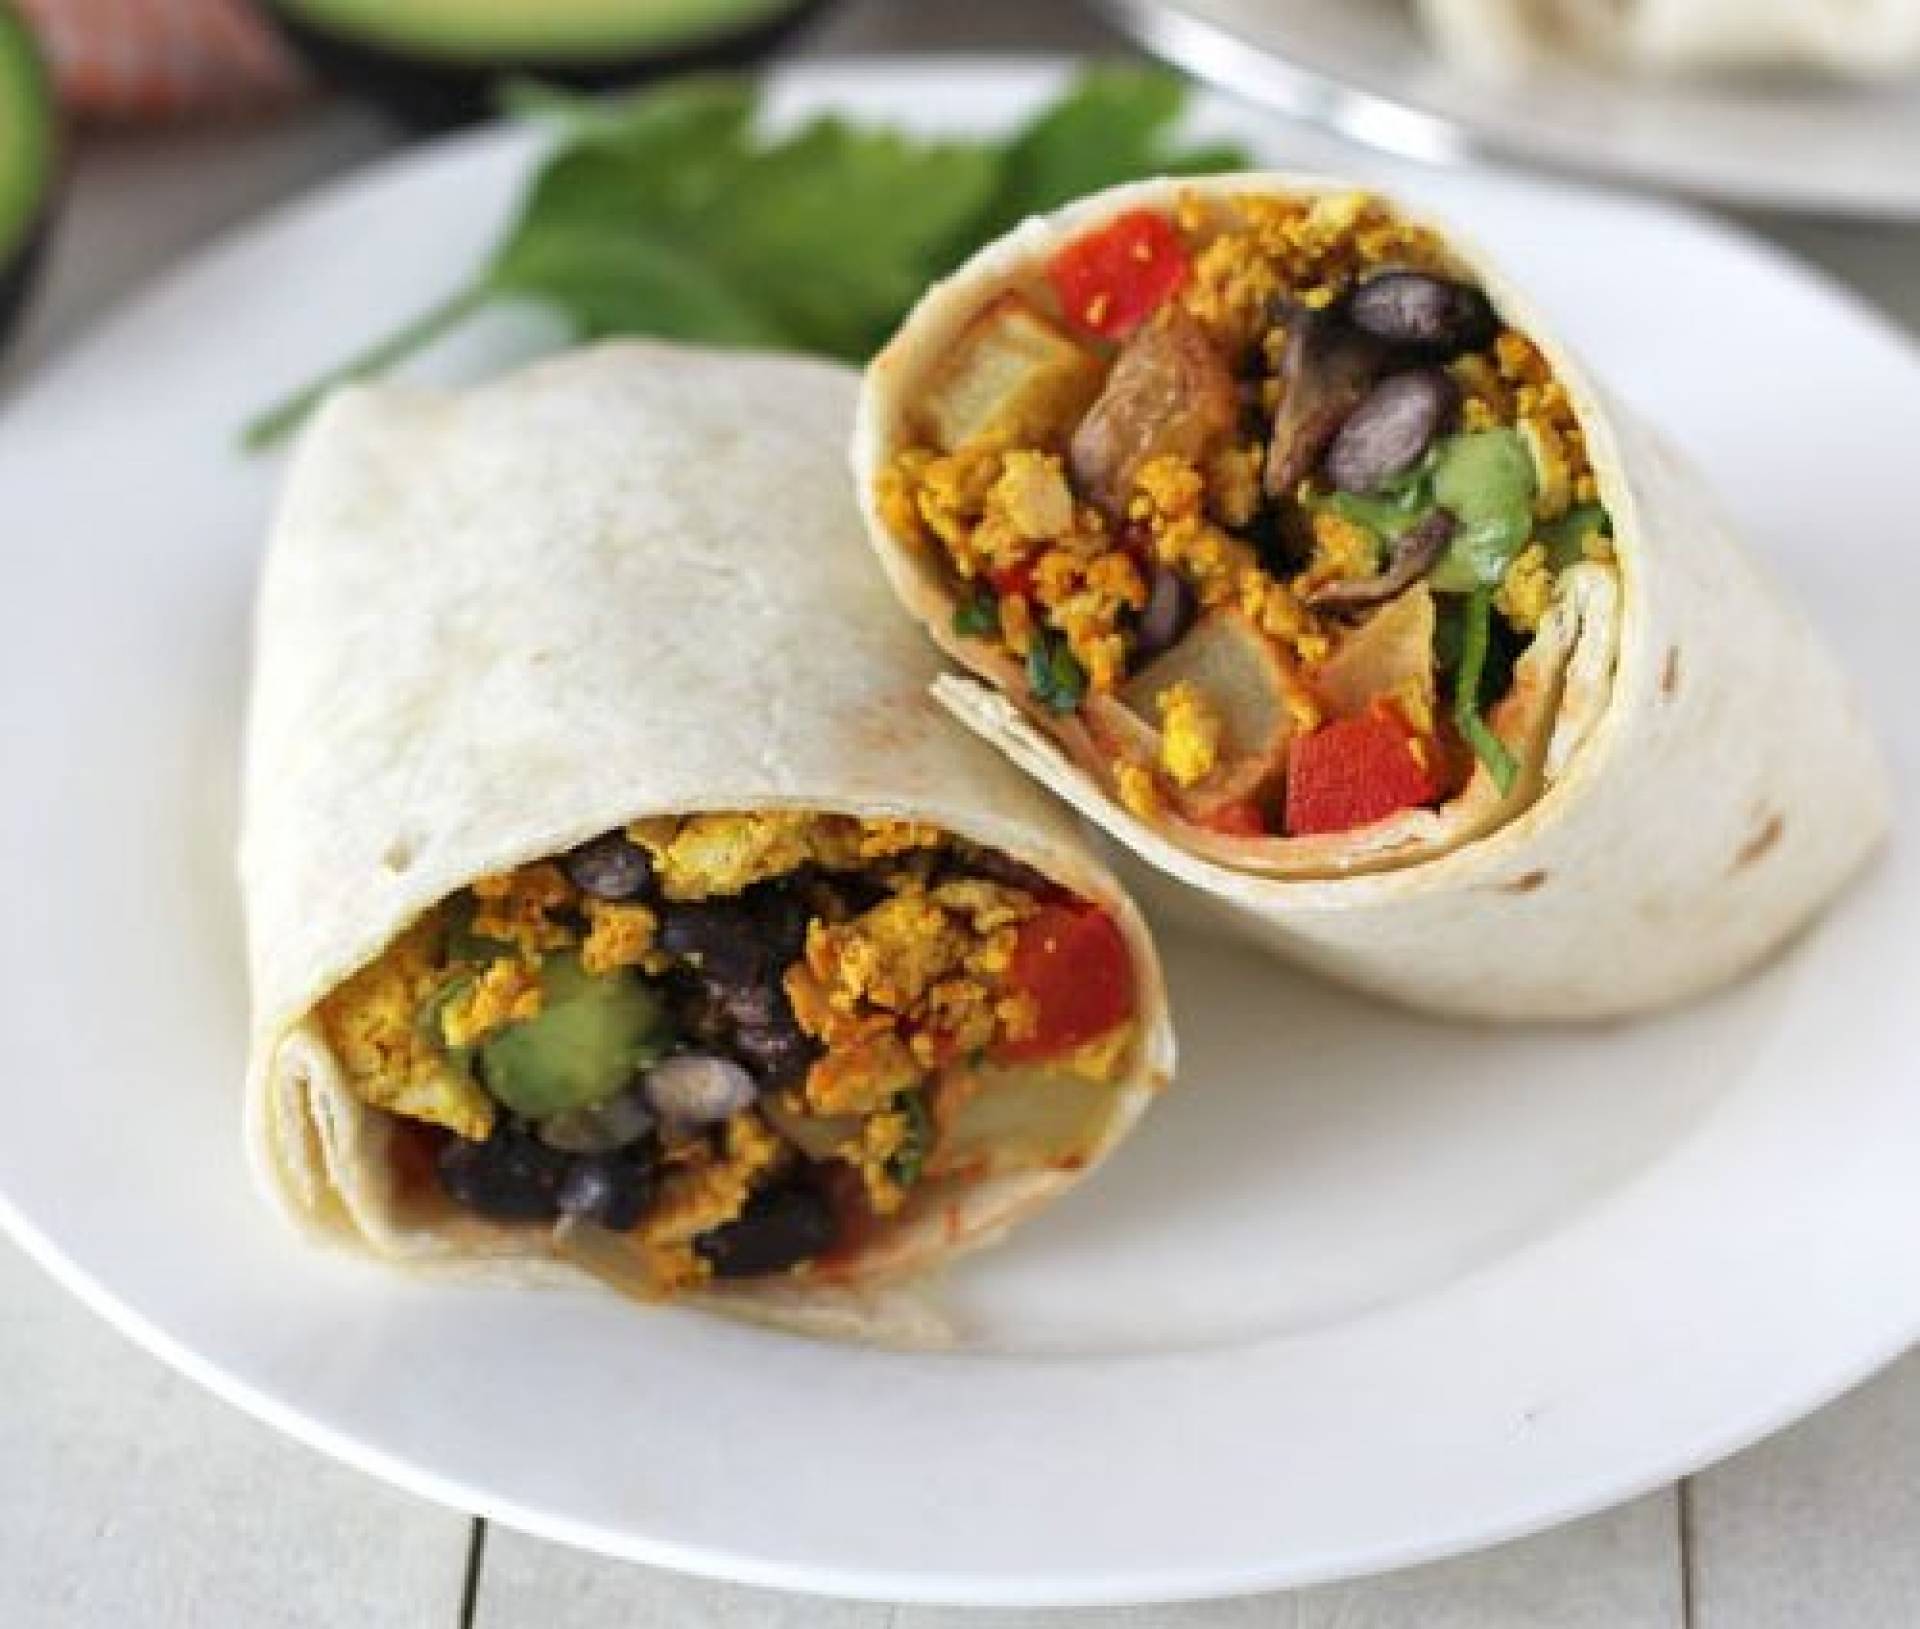 Mexi breakfast burrito (vegan)